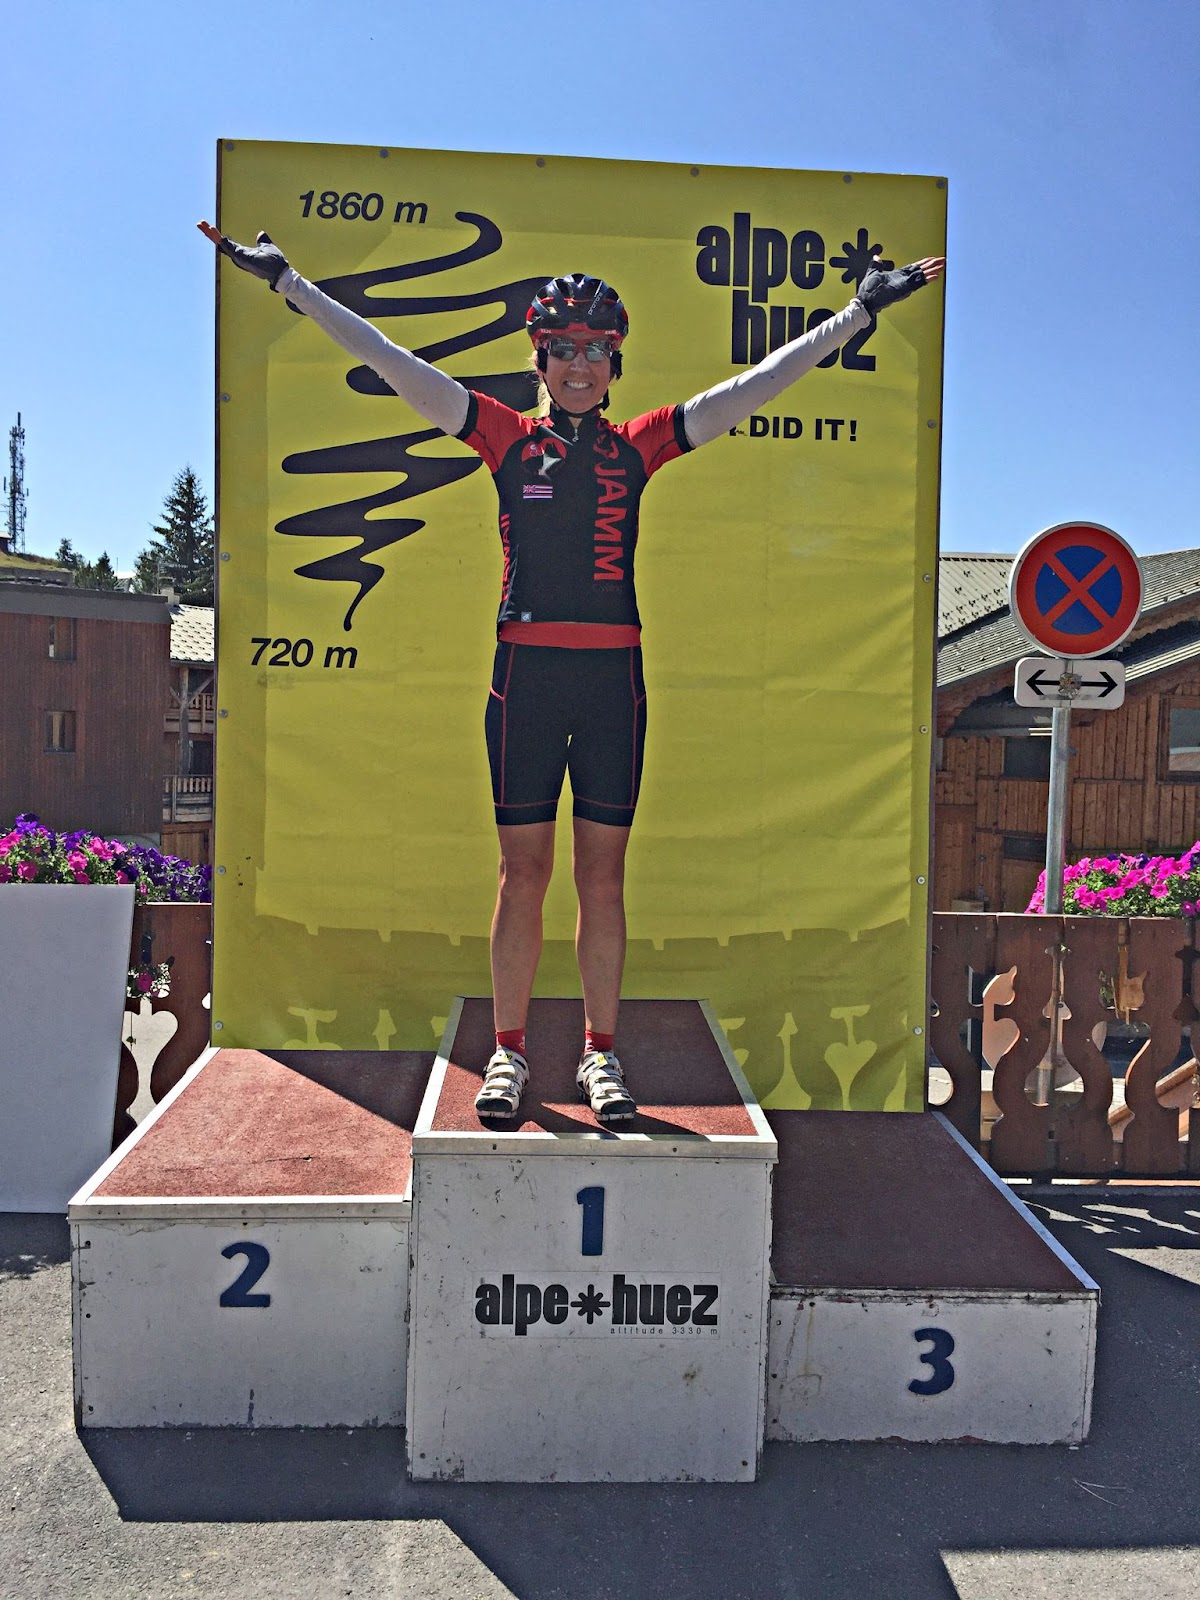 PJAMM Cyclist stands on Tour de France podium on Alpe d'Huez bike climb